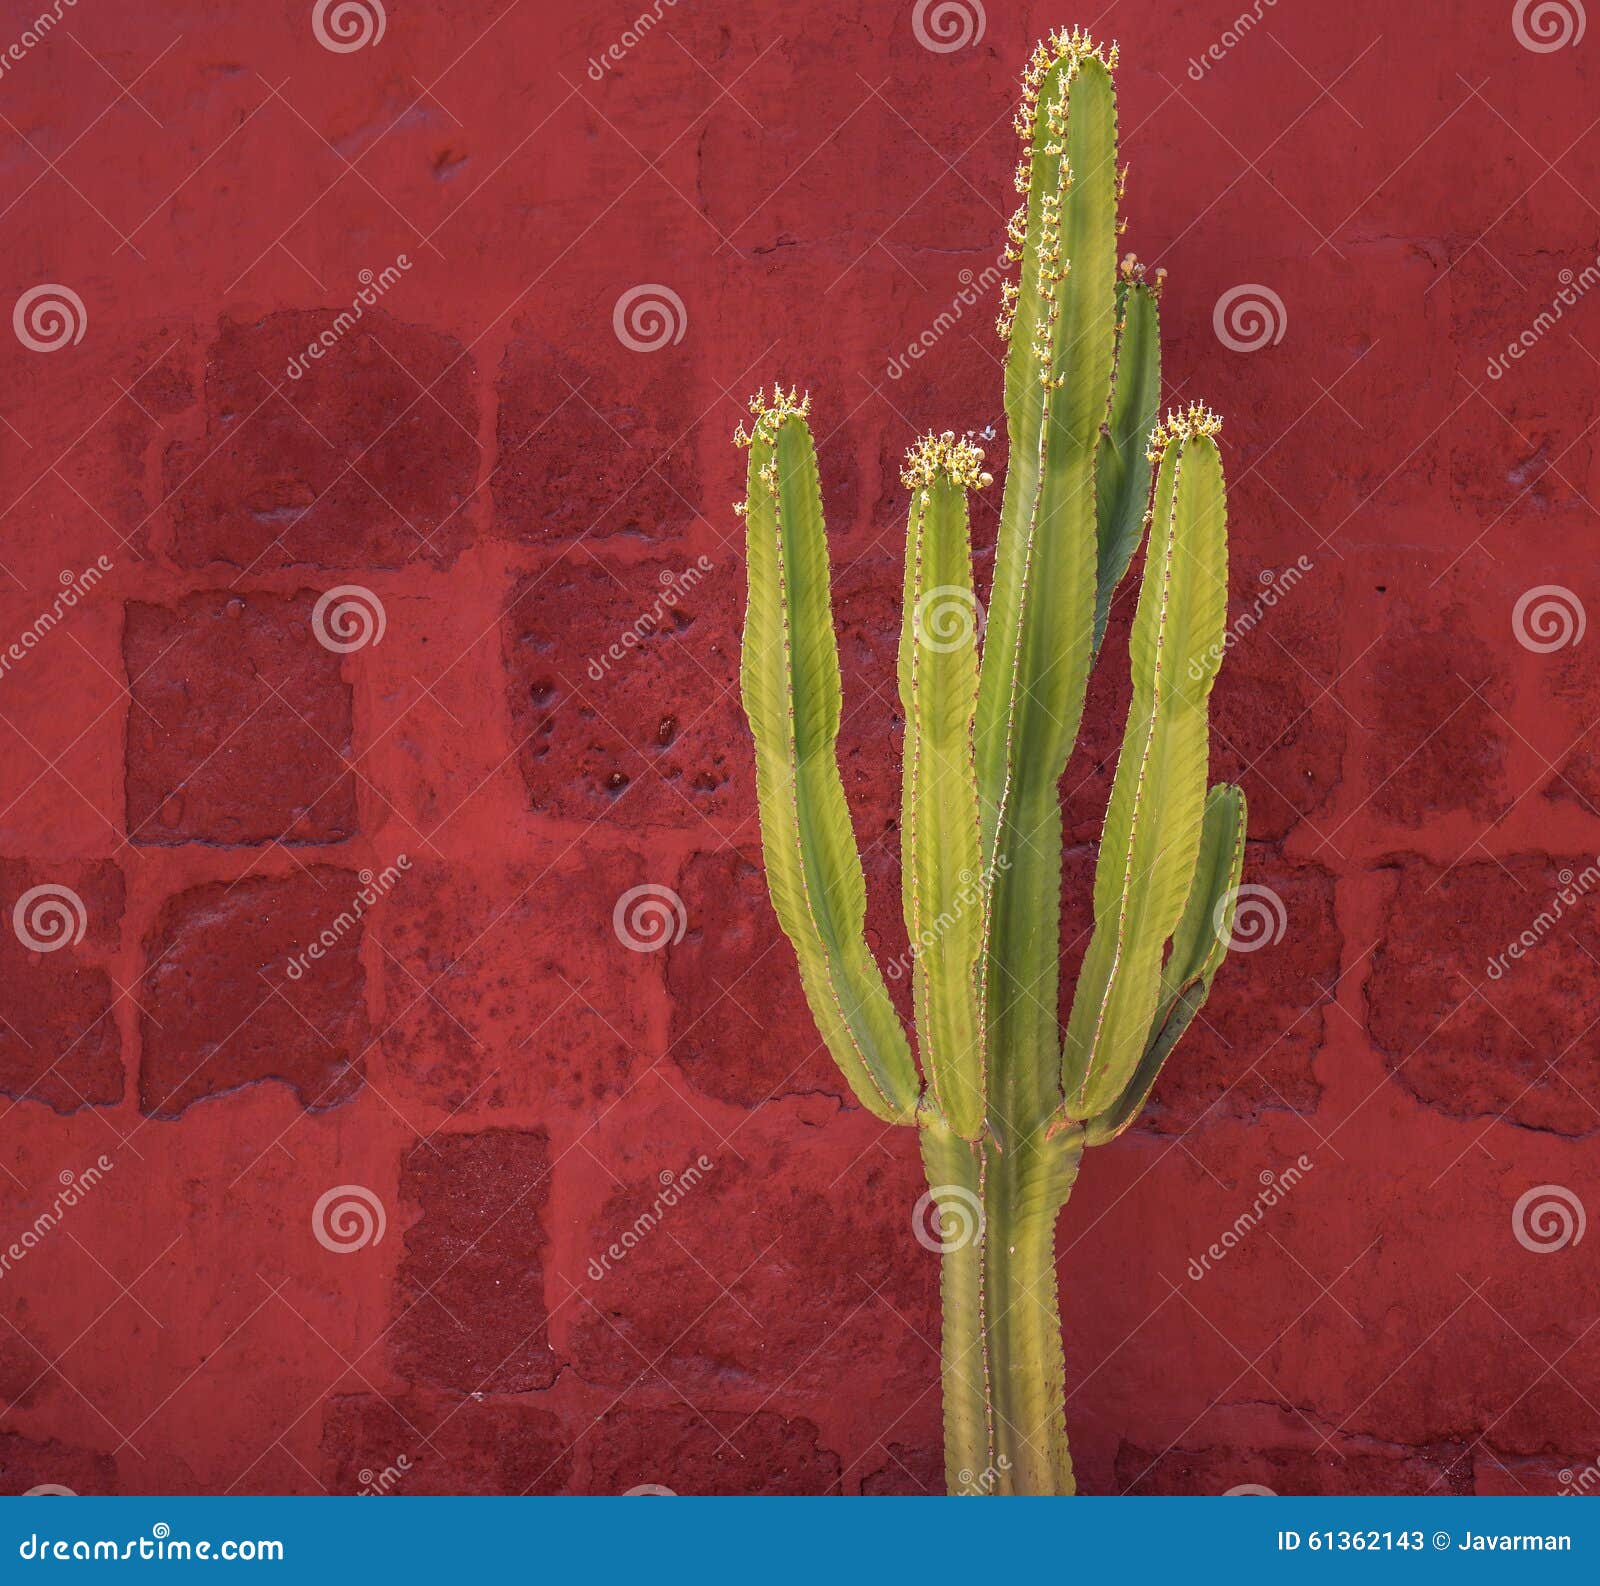 green cactus over red wall, santa catalina monastery, arequipa